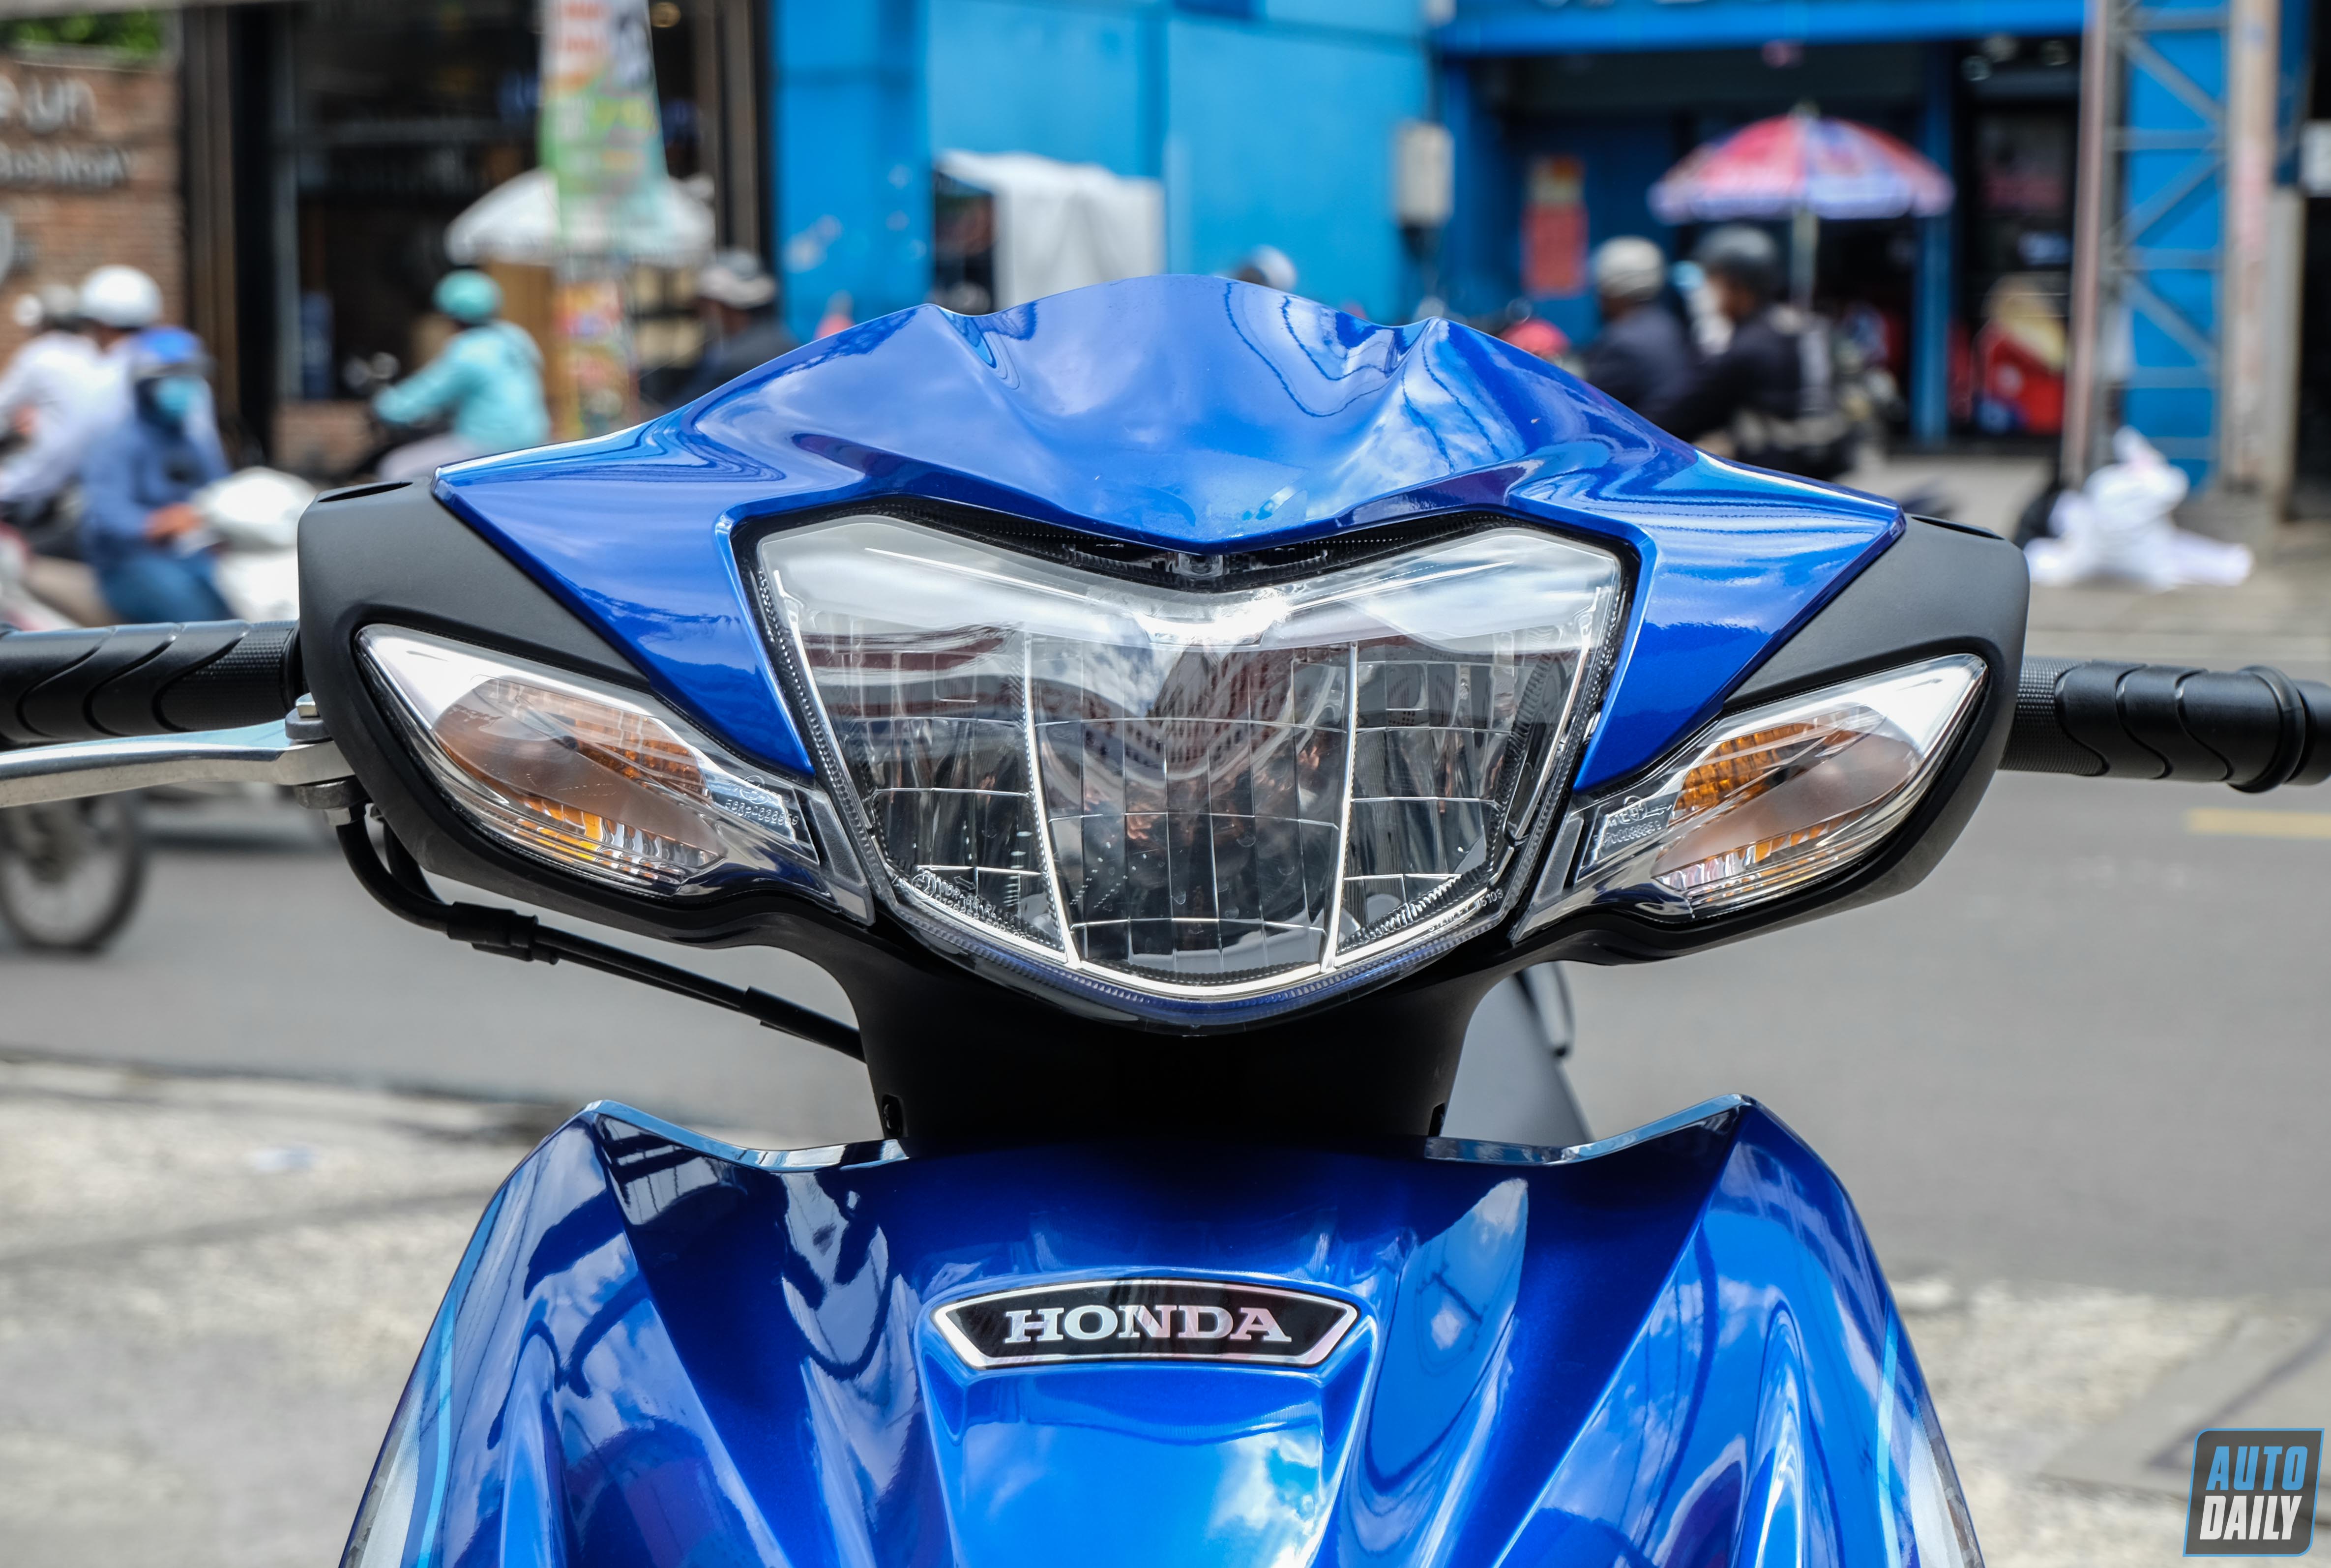 Honda Wave 110i 2021 nhập Thái “ngáo giá” được trang bị những gì? Honda Wave 110i nhập Thái (12).jpg